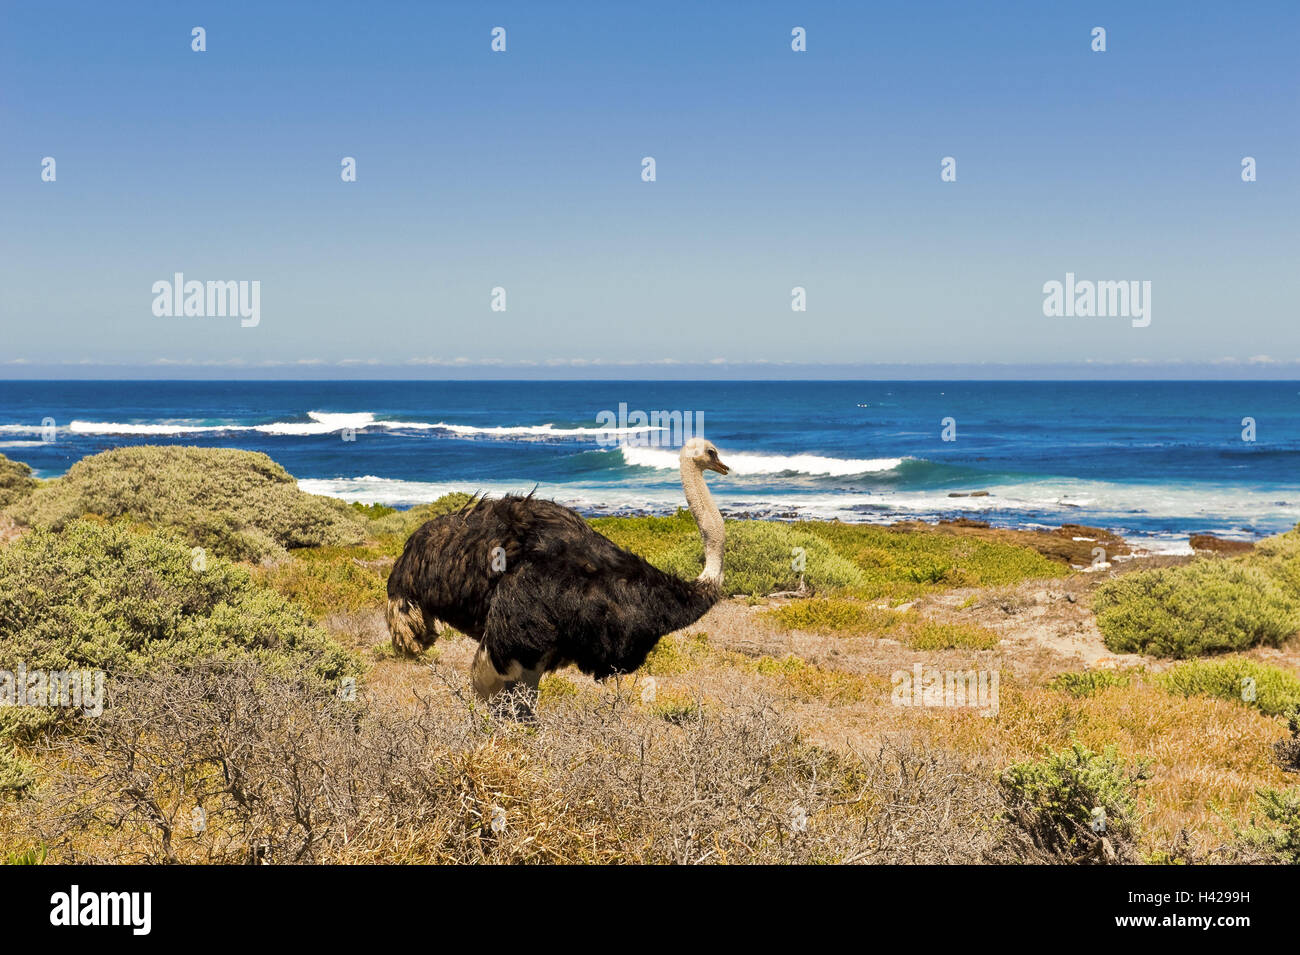 South Africa, Western Cape, Cape of Good Hope Nature Reserve, coast, ostrich, sea, Stock Photo